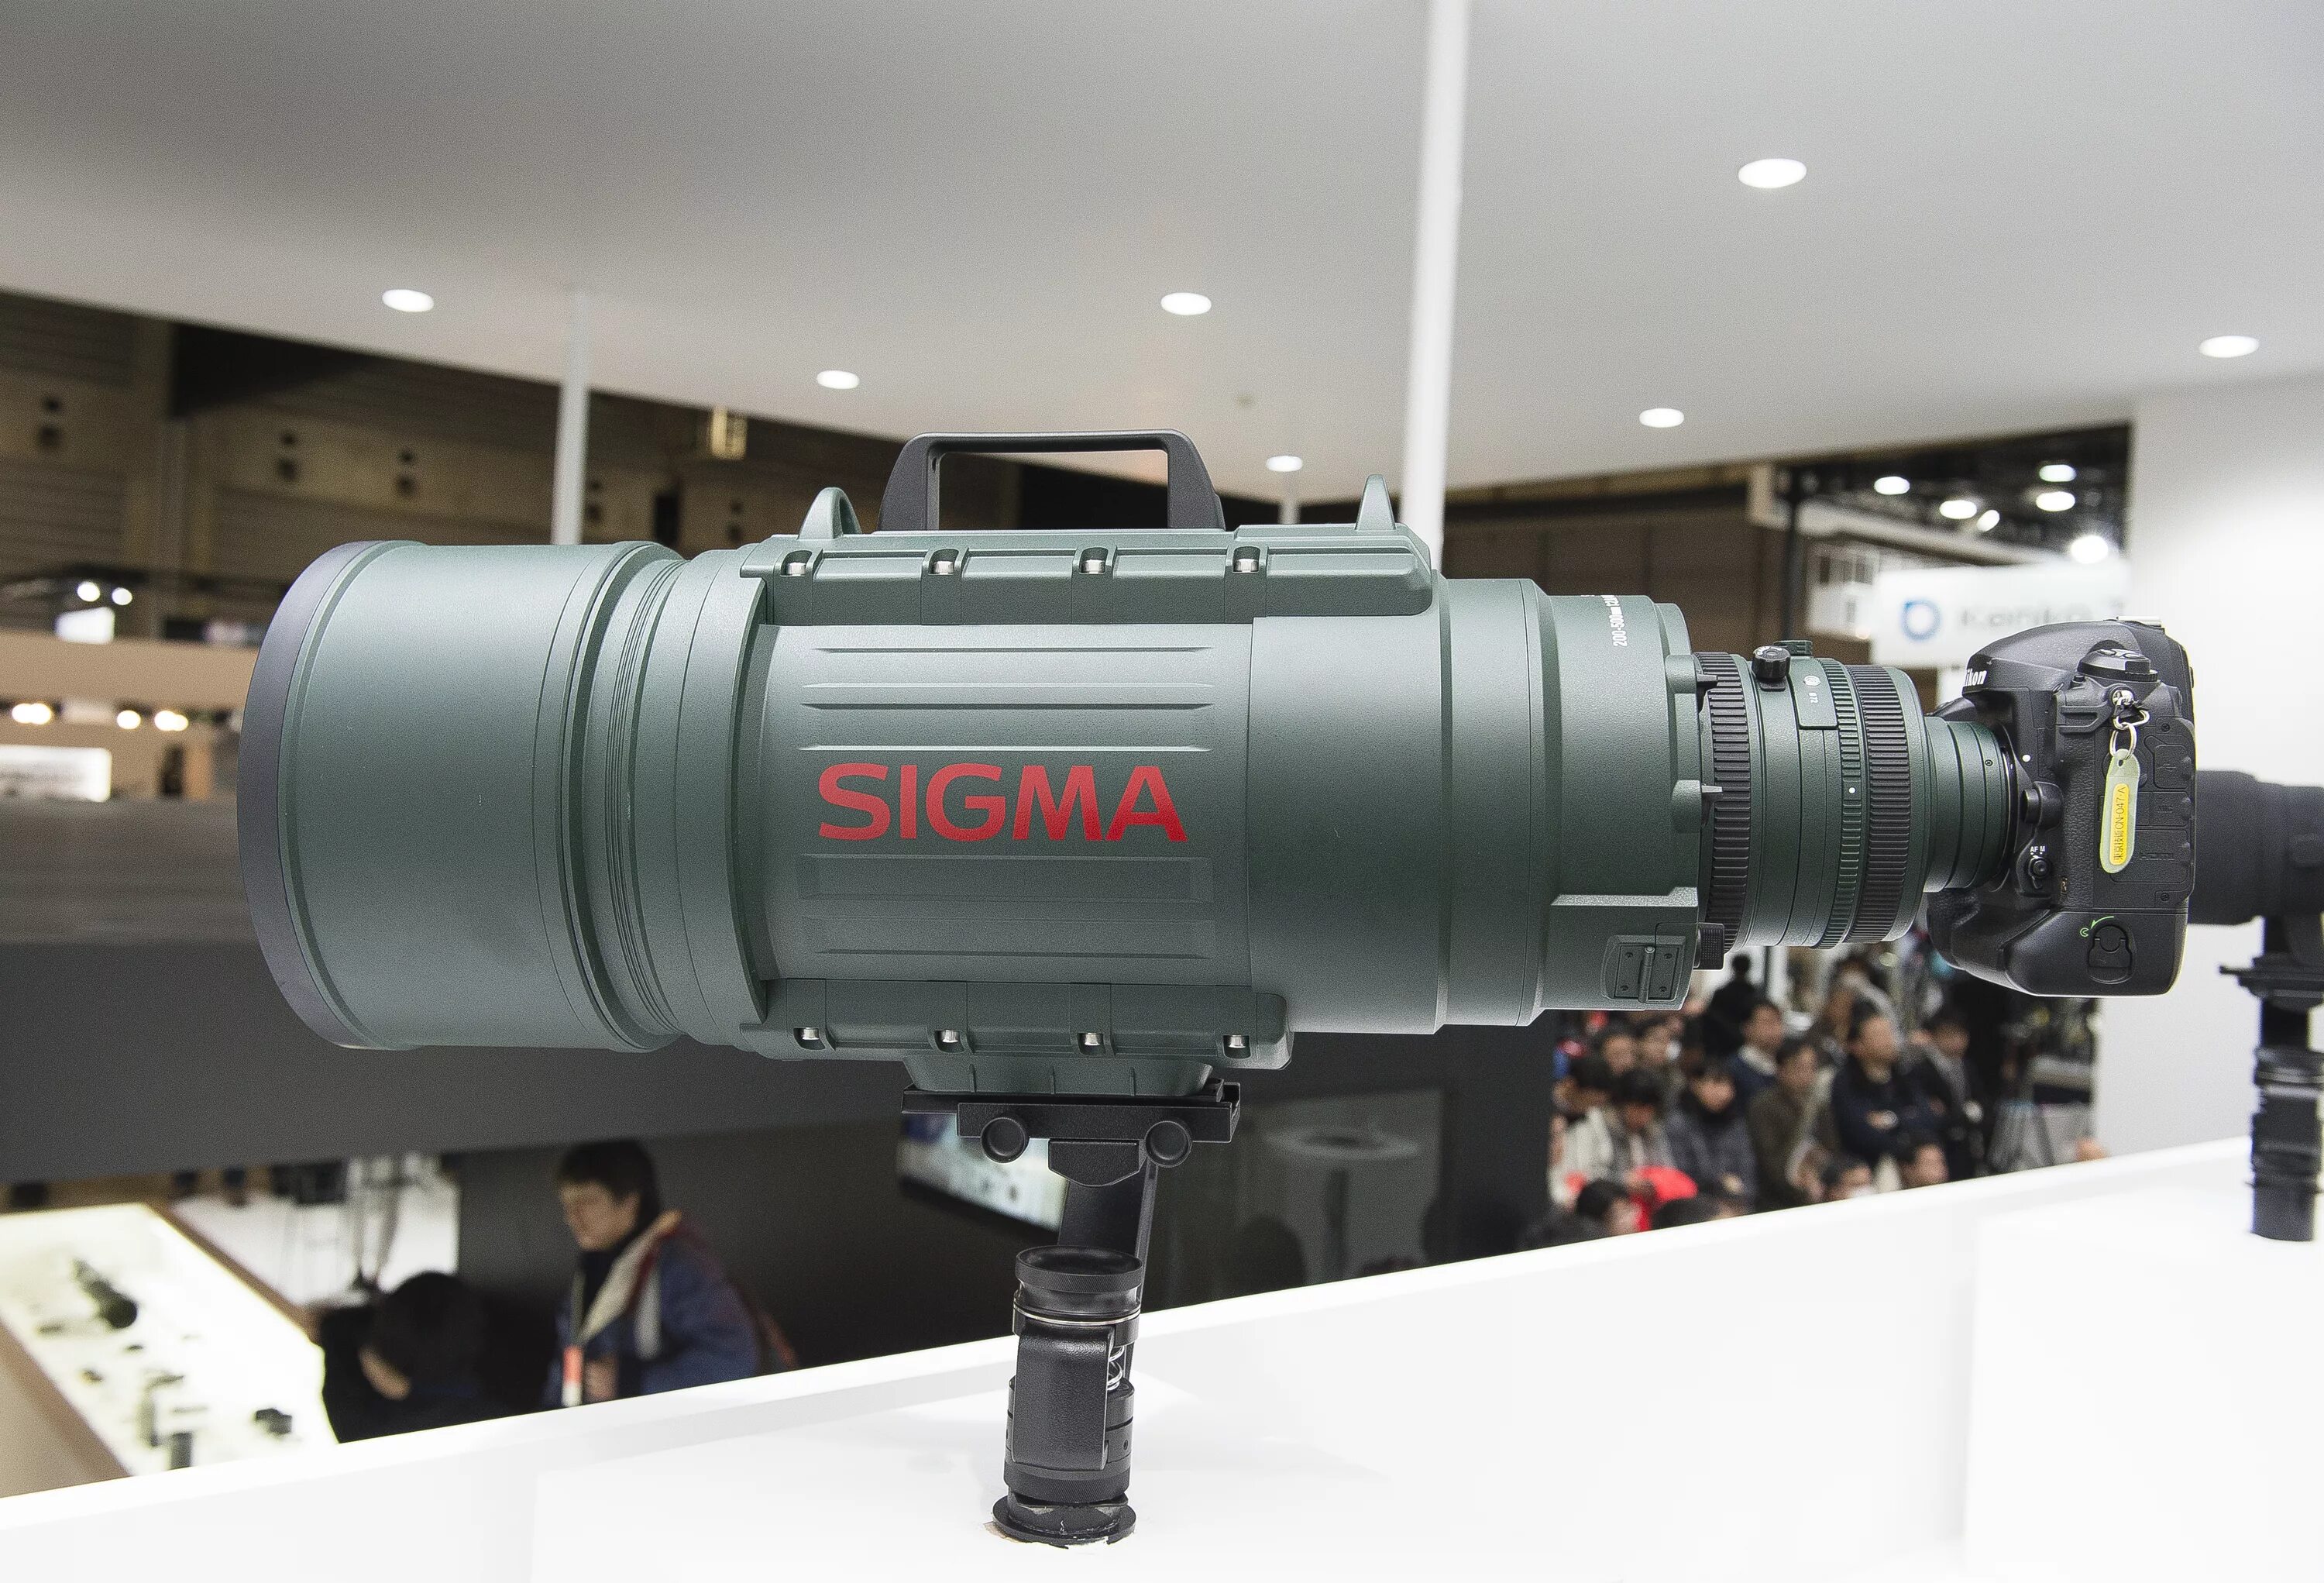 Sigma 200-500mm f/2.8 apo ex DG. Sigma 200-500 mm f2.8. Sigma 200-500 f/2.8. Sigma af 200-500mm f/2.8. Sigma 2.0